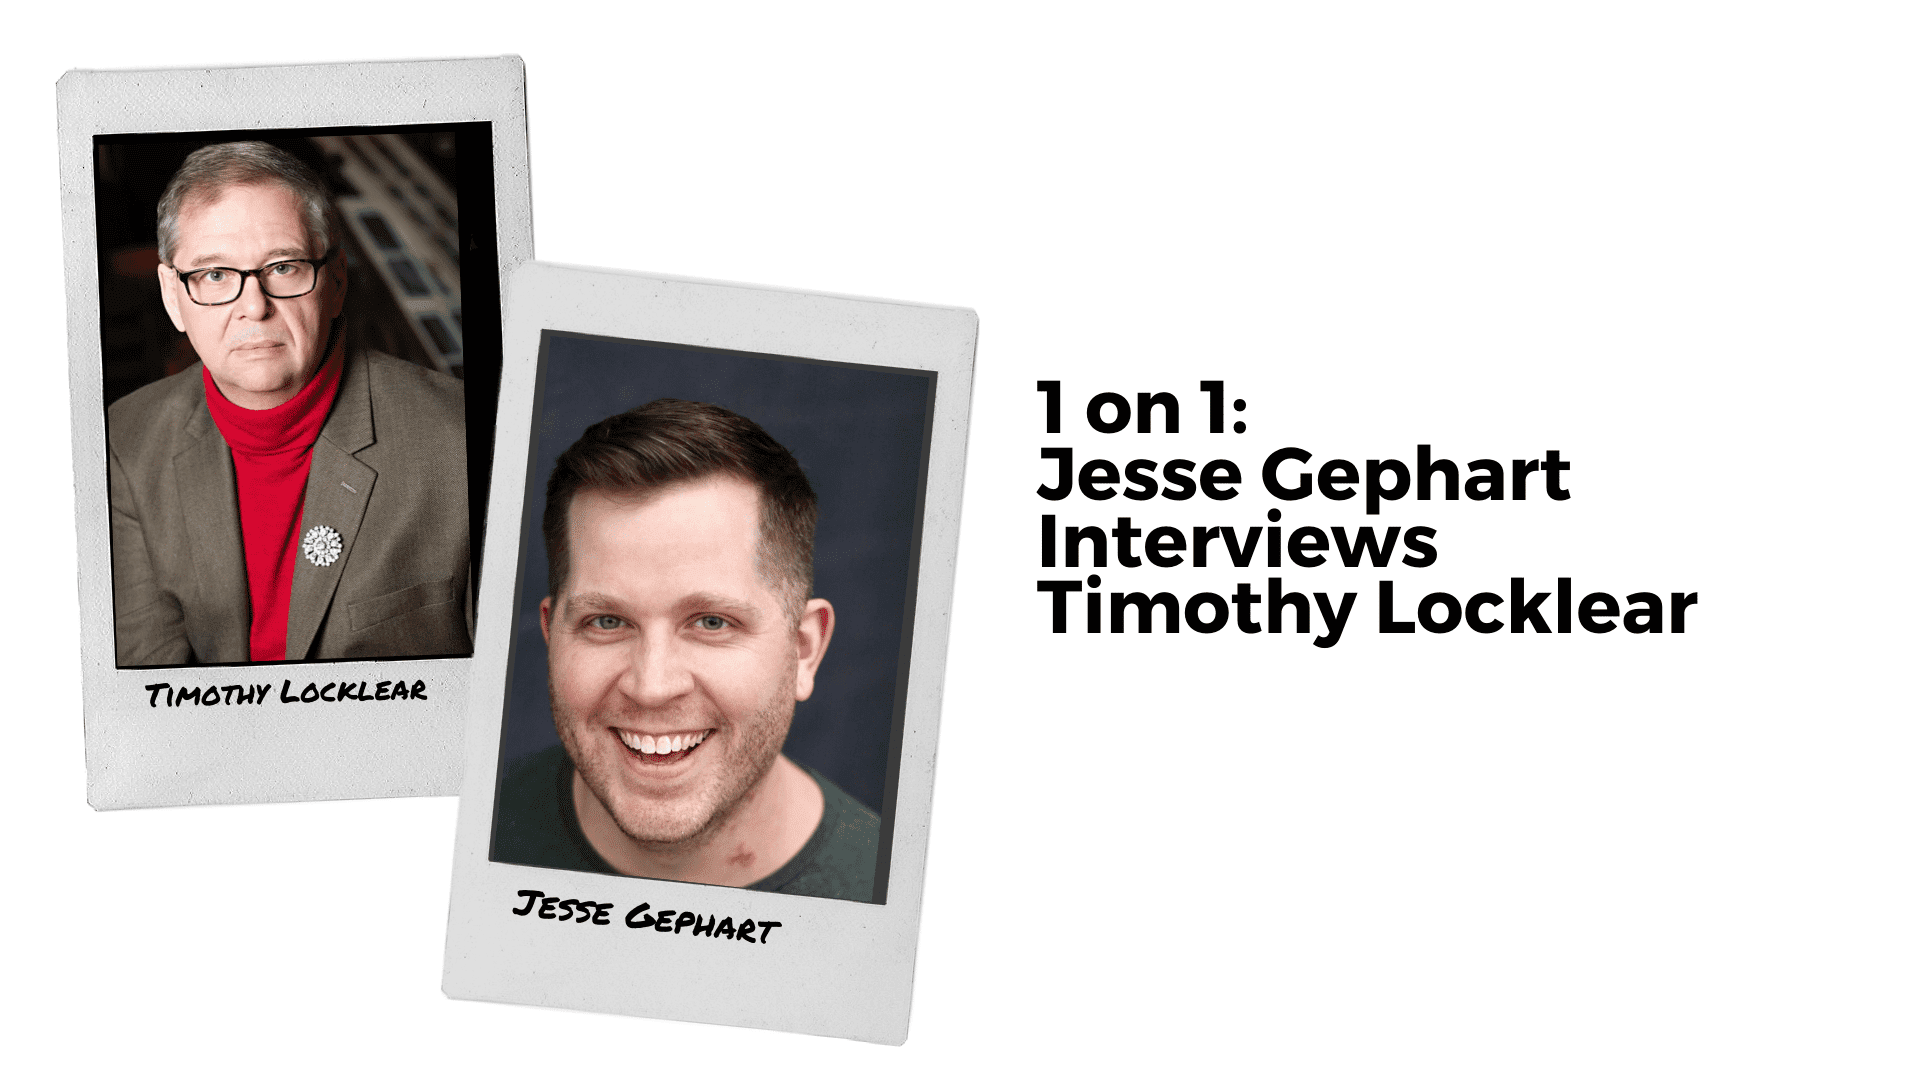 1 on 1: Jesse Gephart Interviews Timothy Locklear